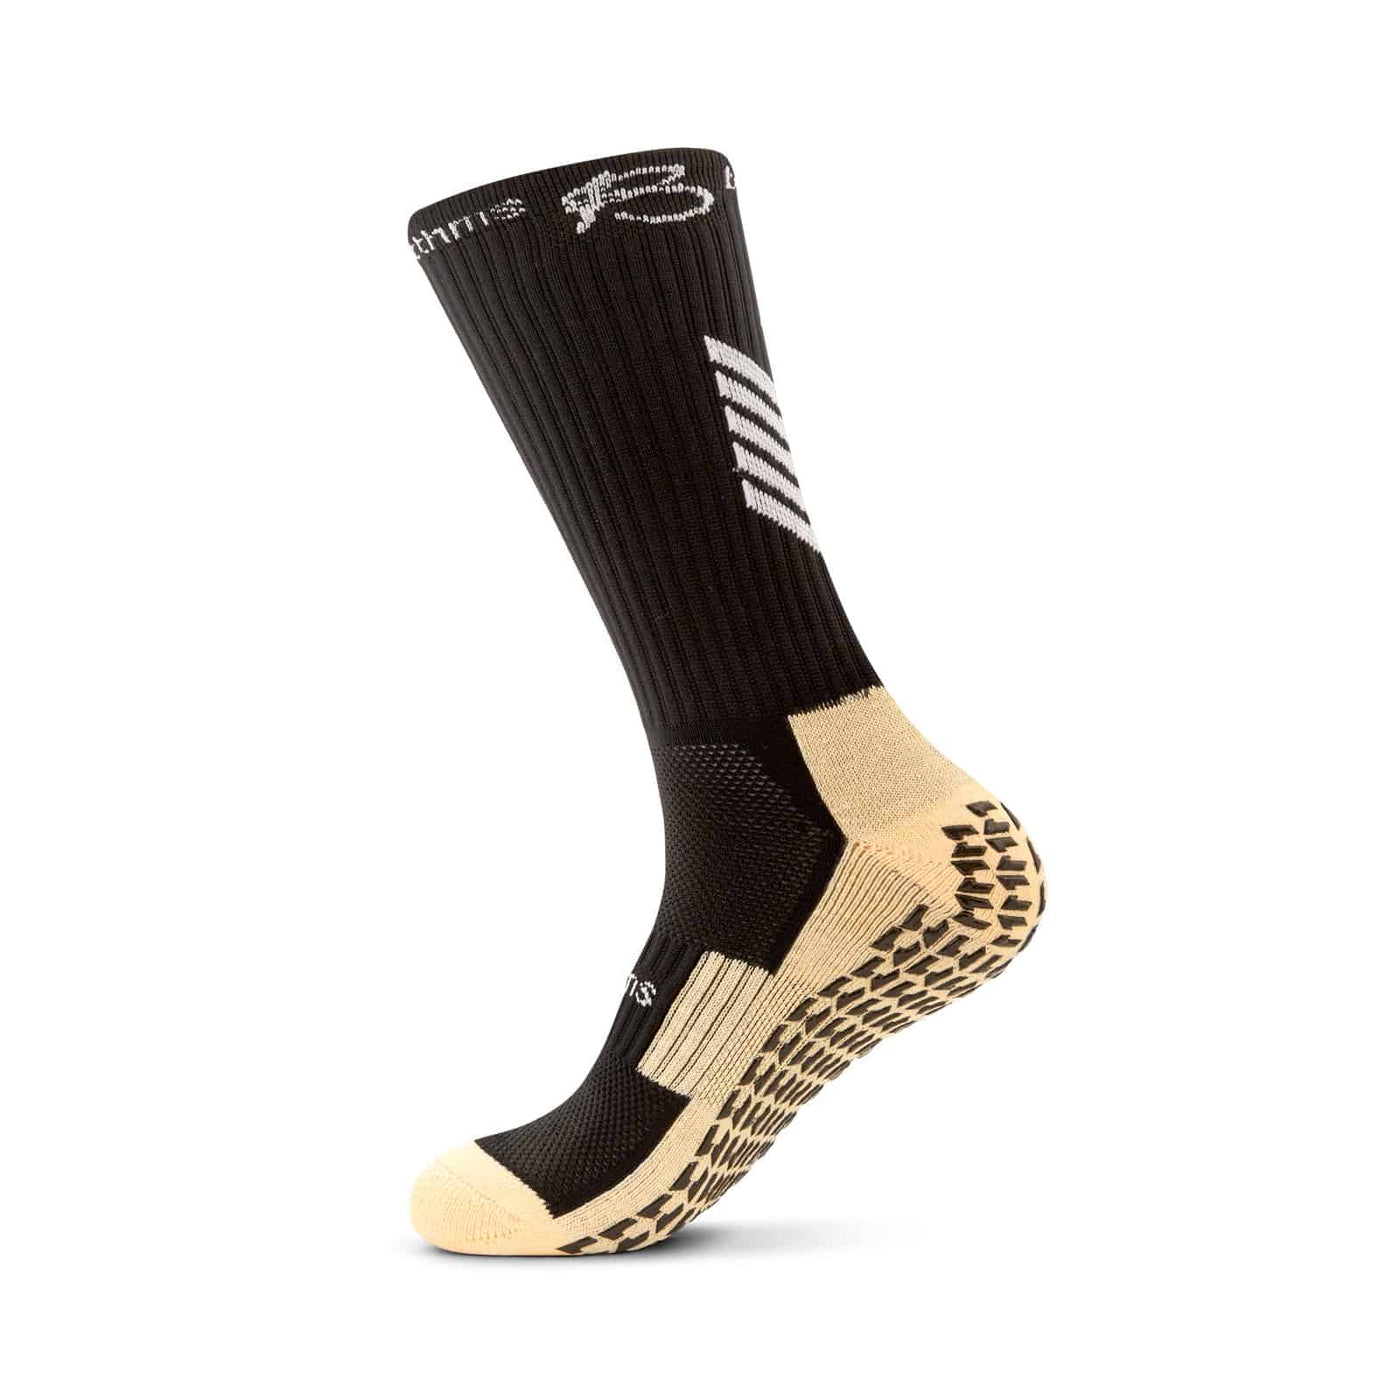 Black Grip Socks For Athletes - Shop Our Collection - Botthms